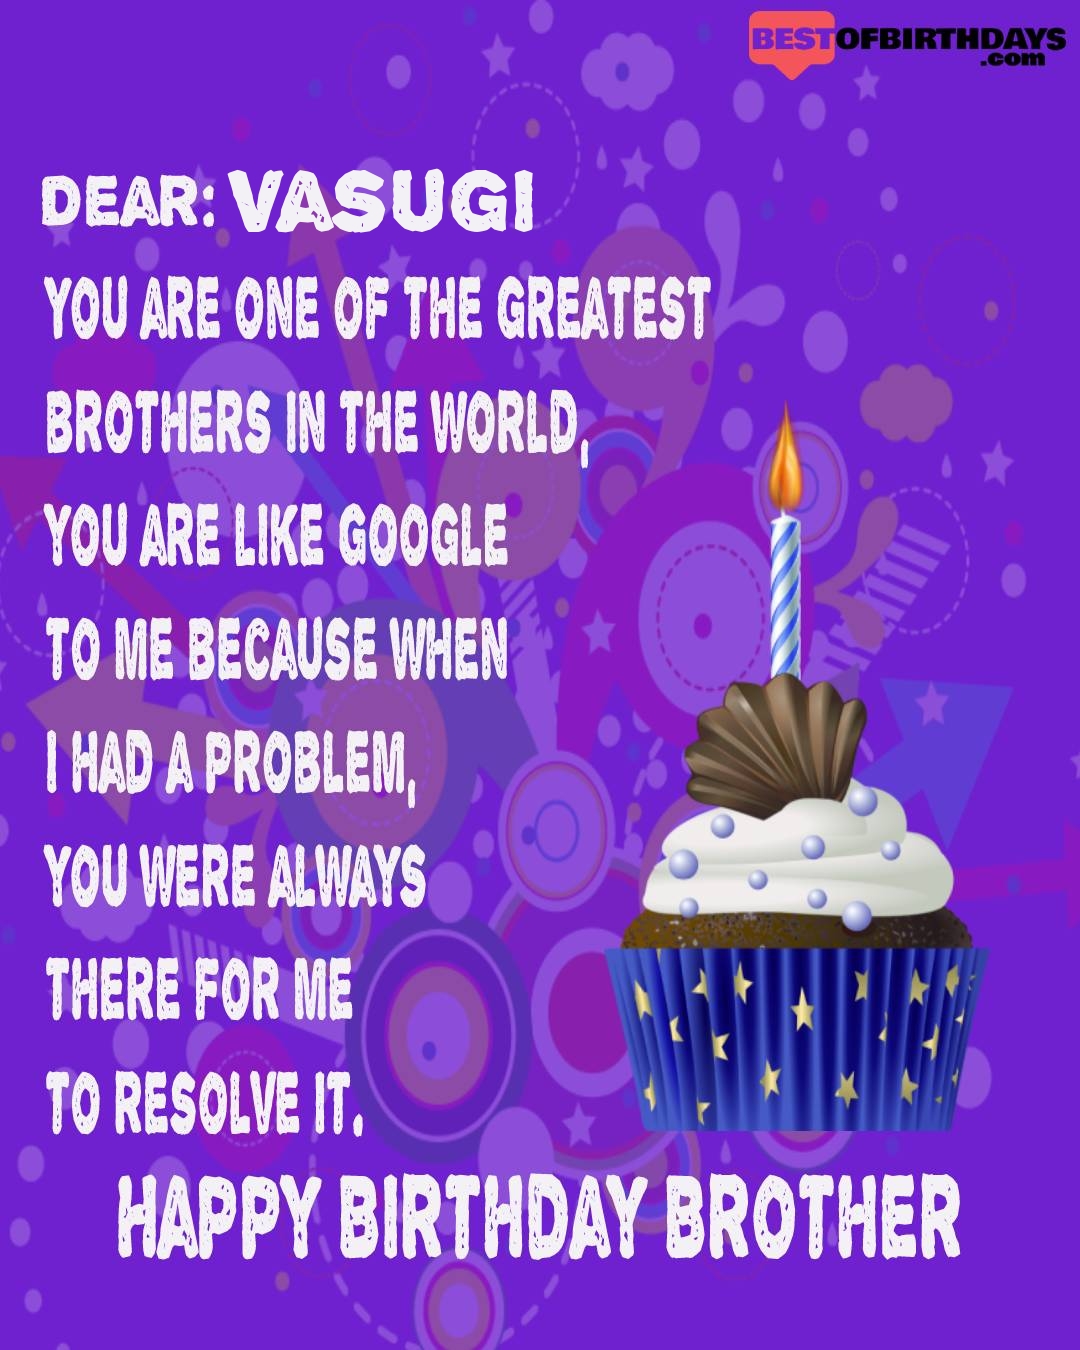 Happy birthday vasugi bhai brother bro